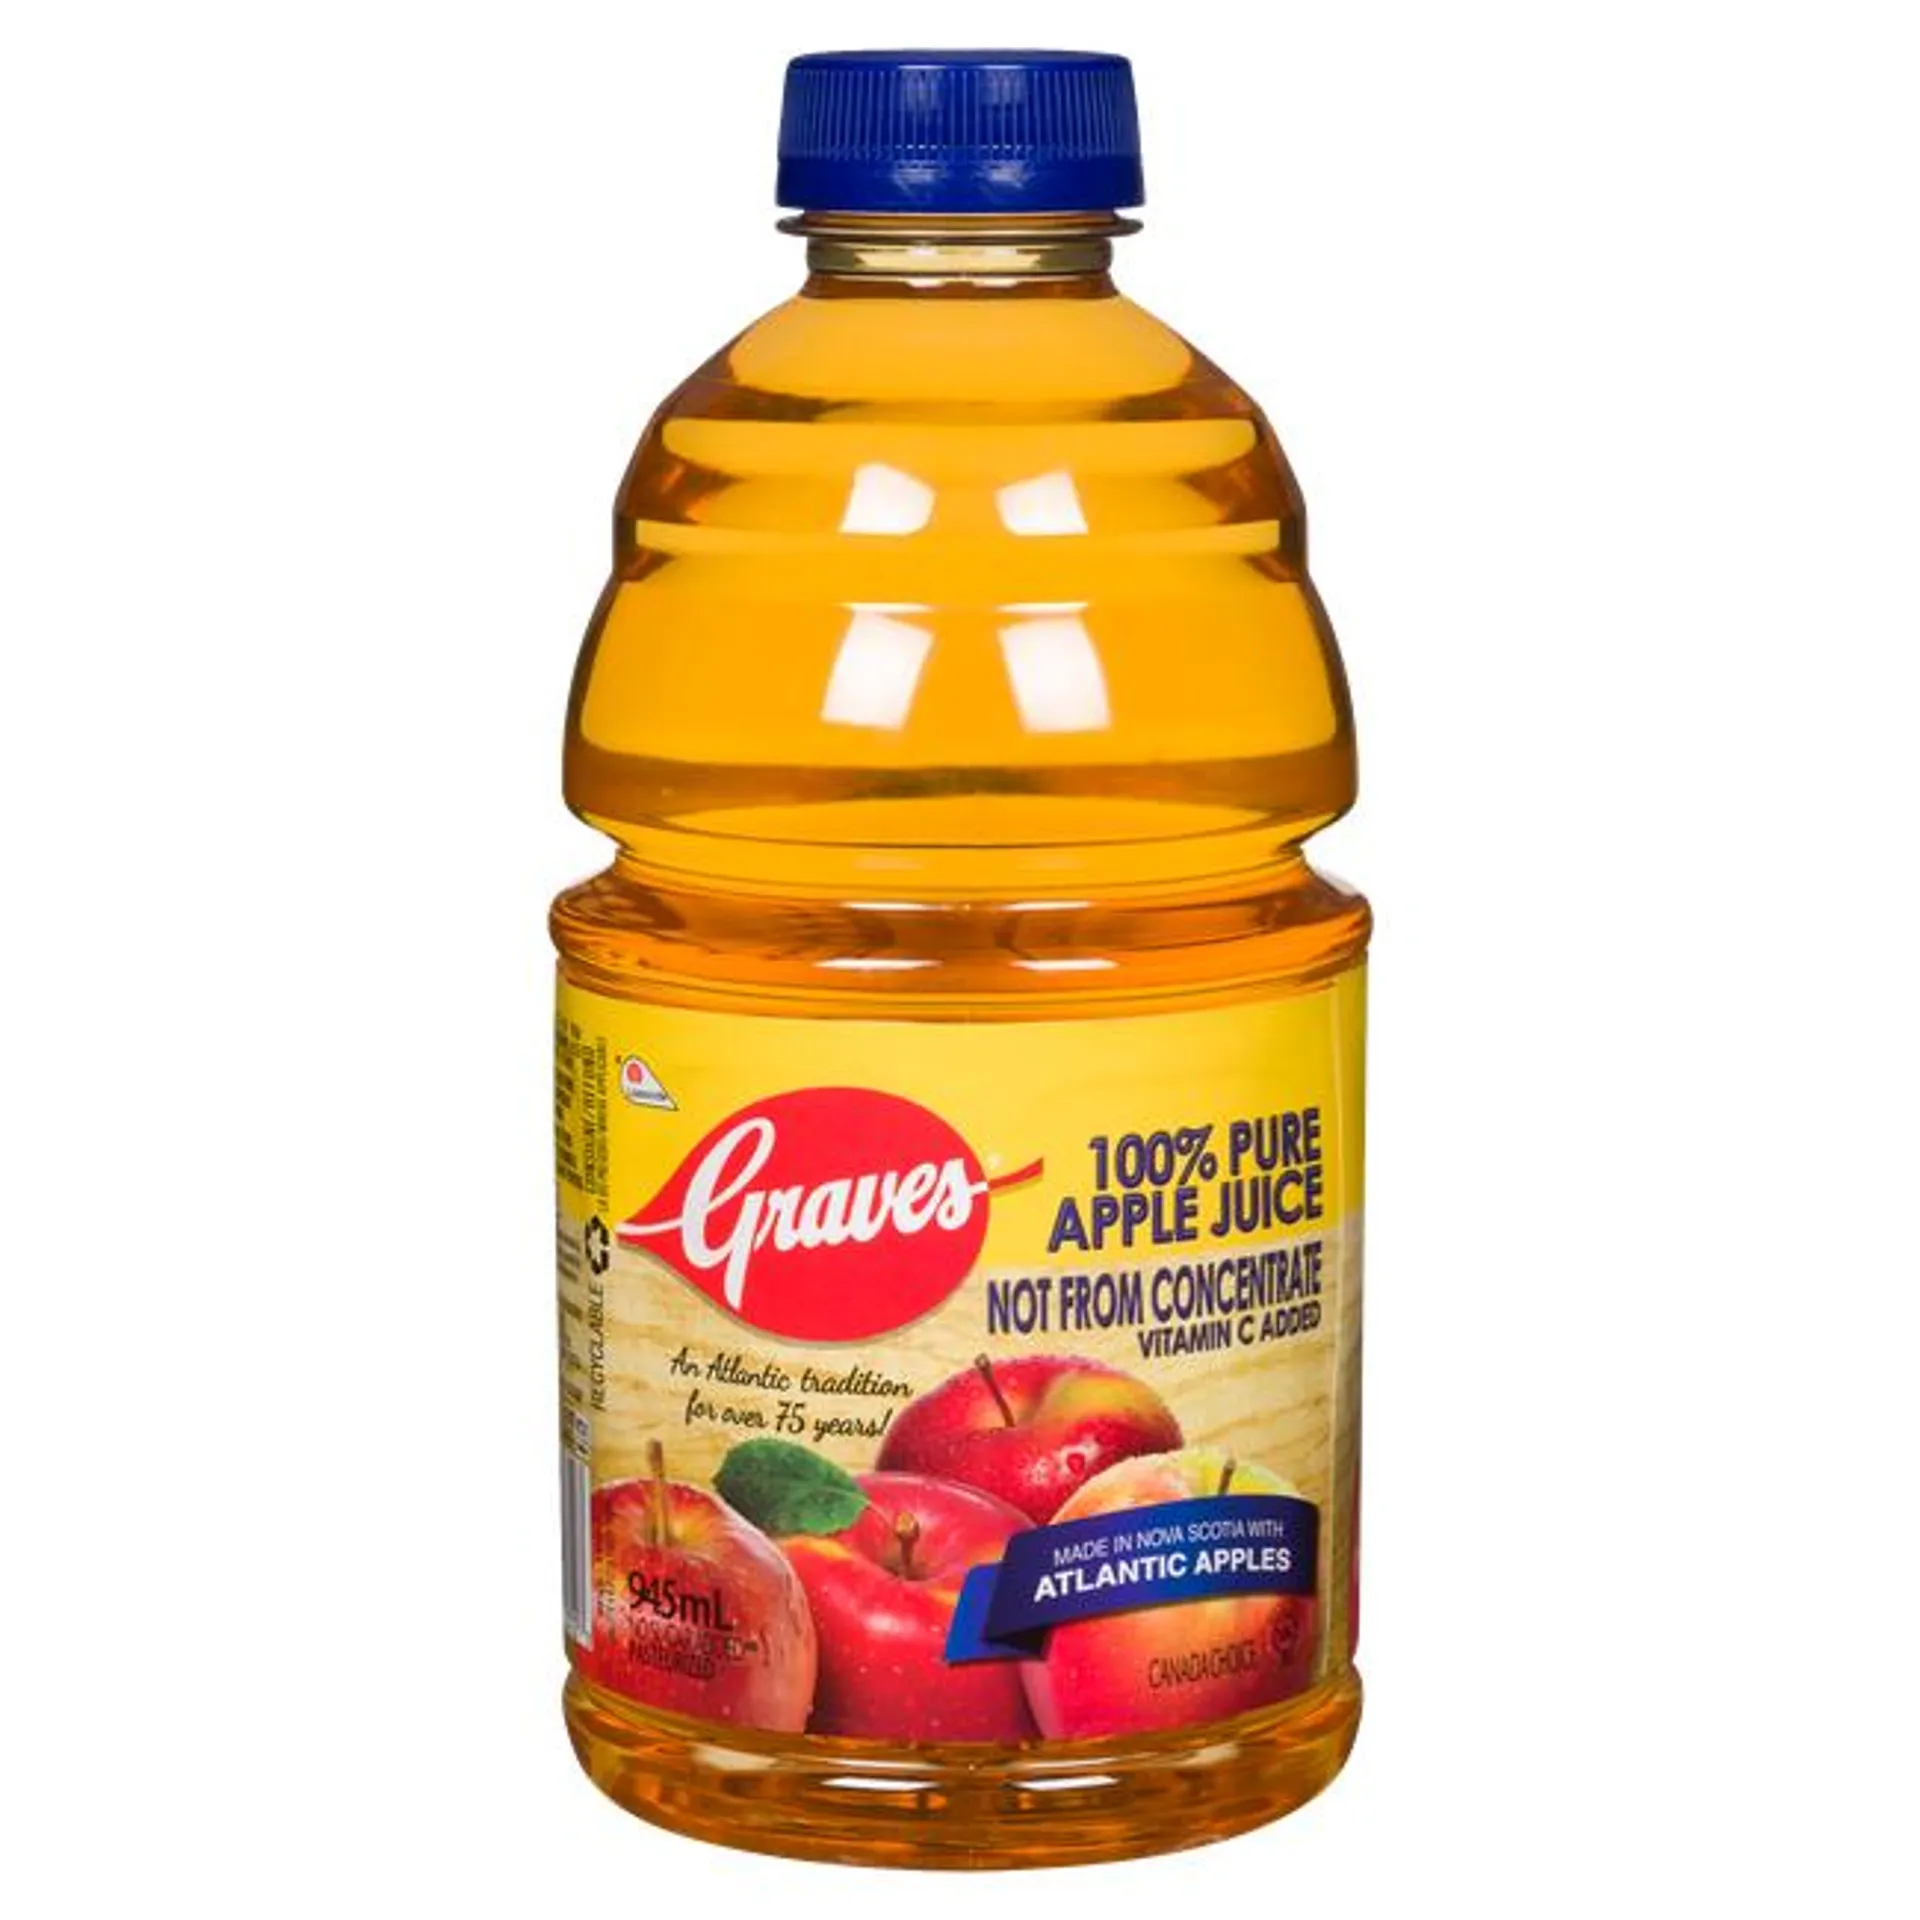 Graves 100% Pure Apple Juice 945 Ml